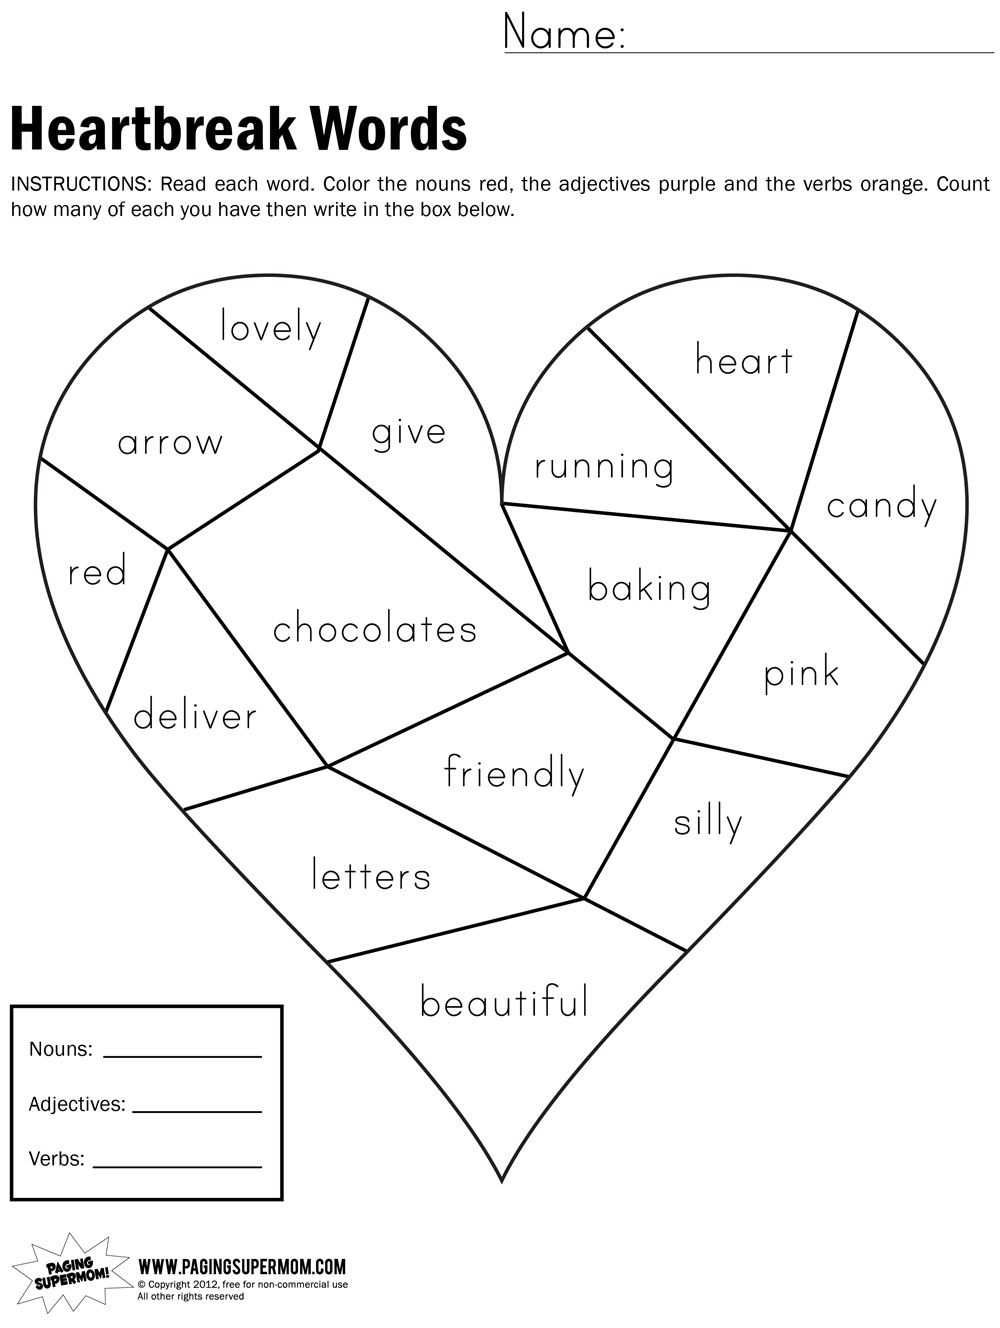 Heartbreak Words Free Printable Worksheet | Education---February - Free Printable Valentine Math Worksheets